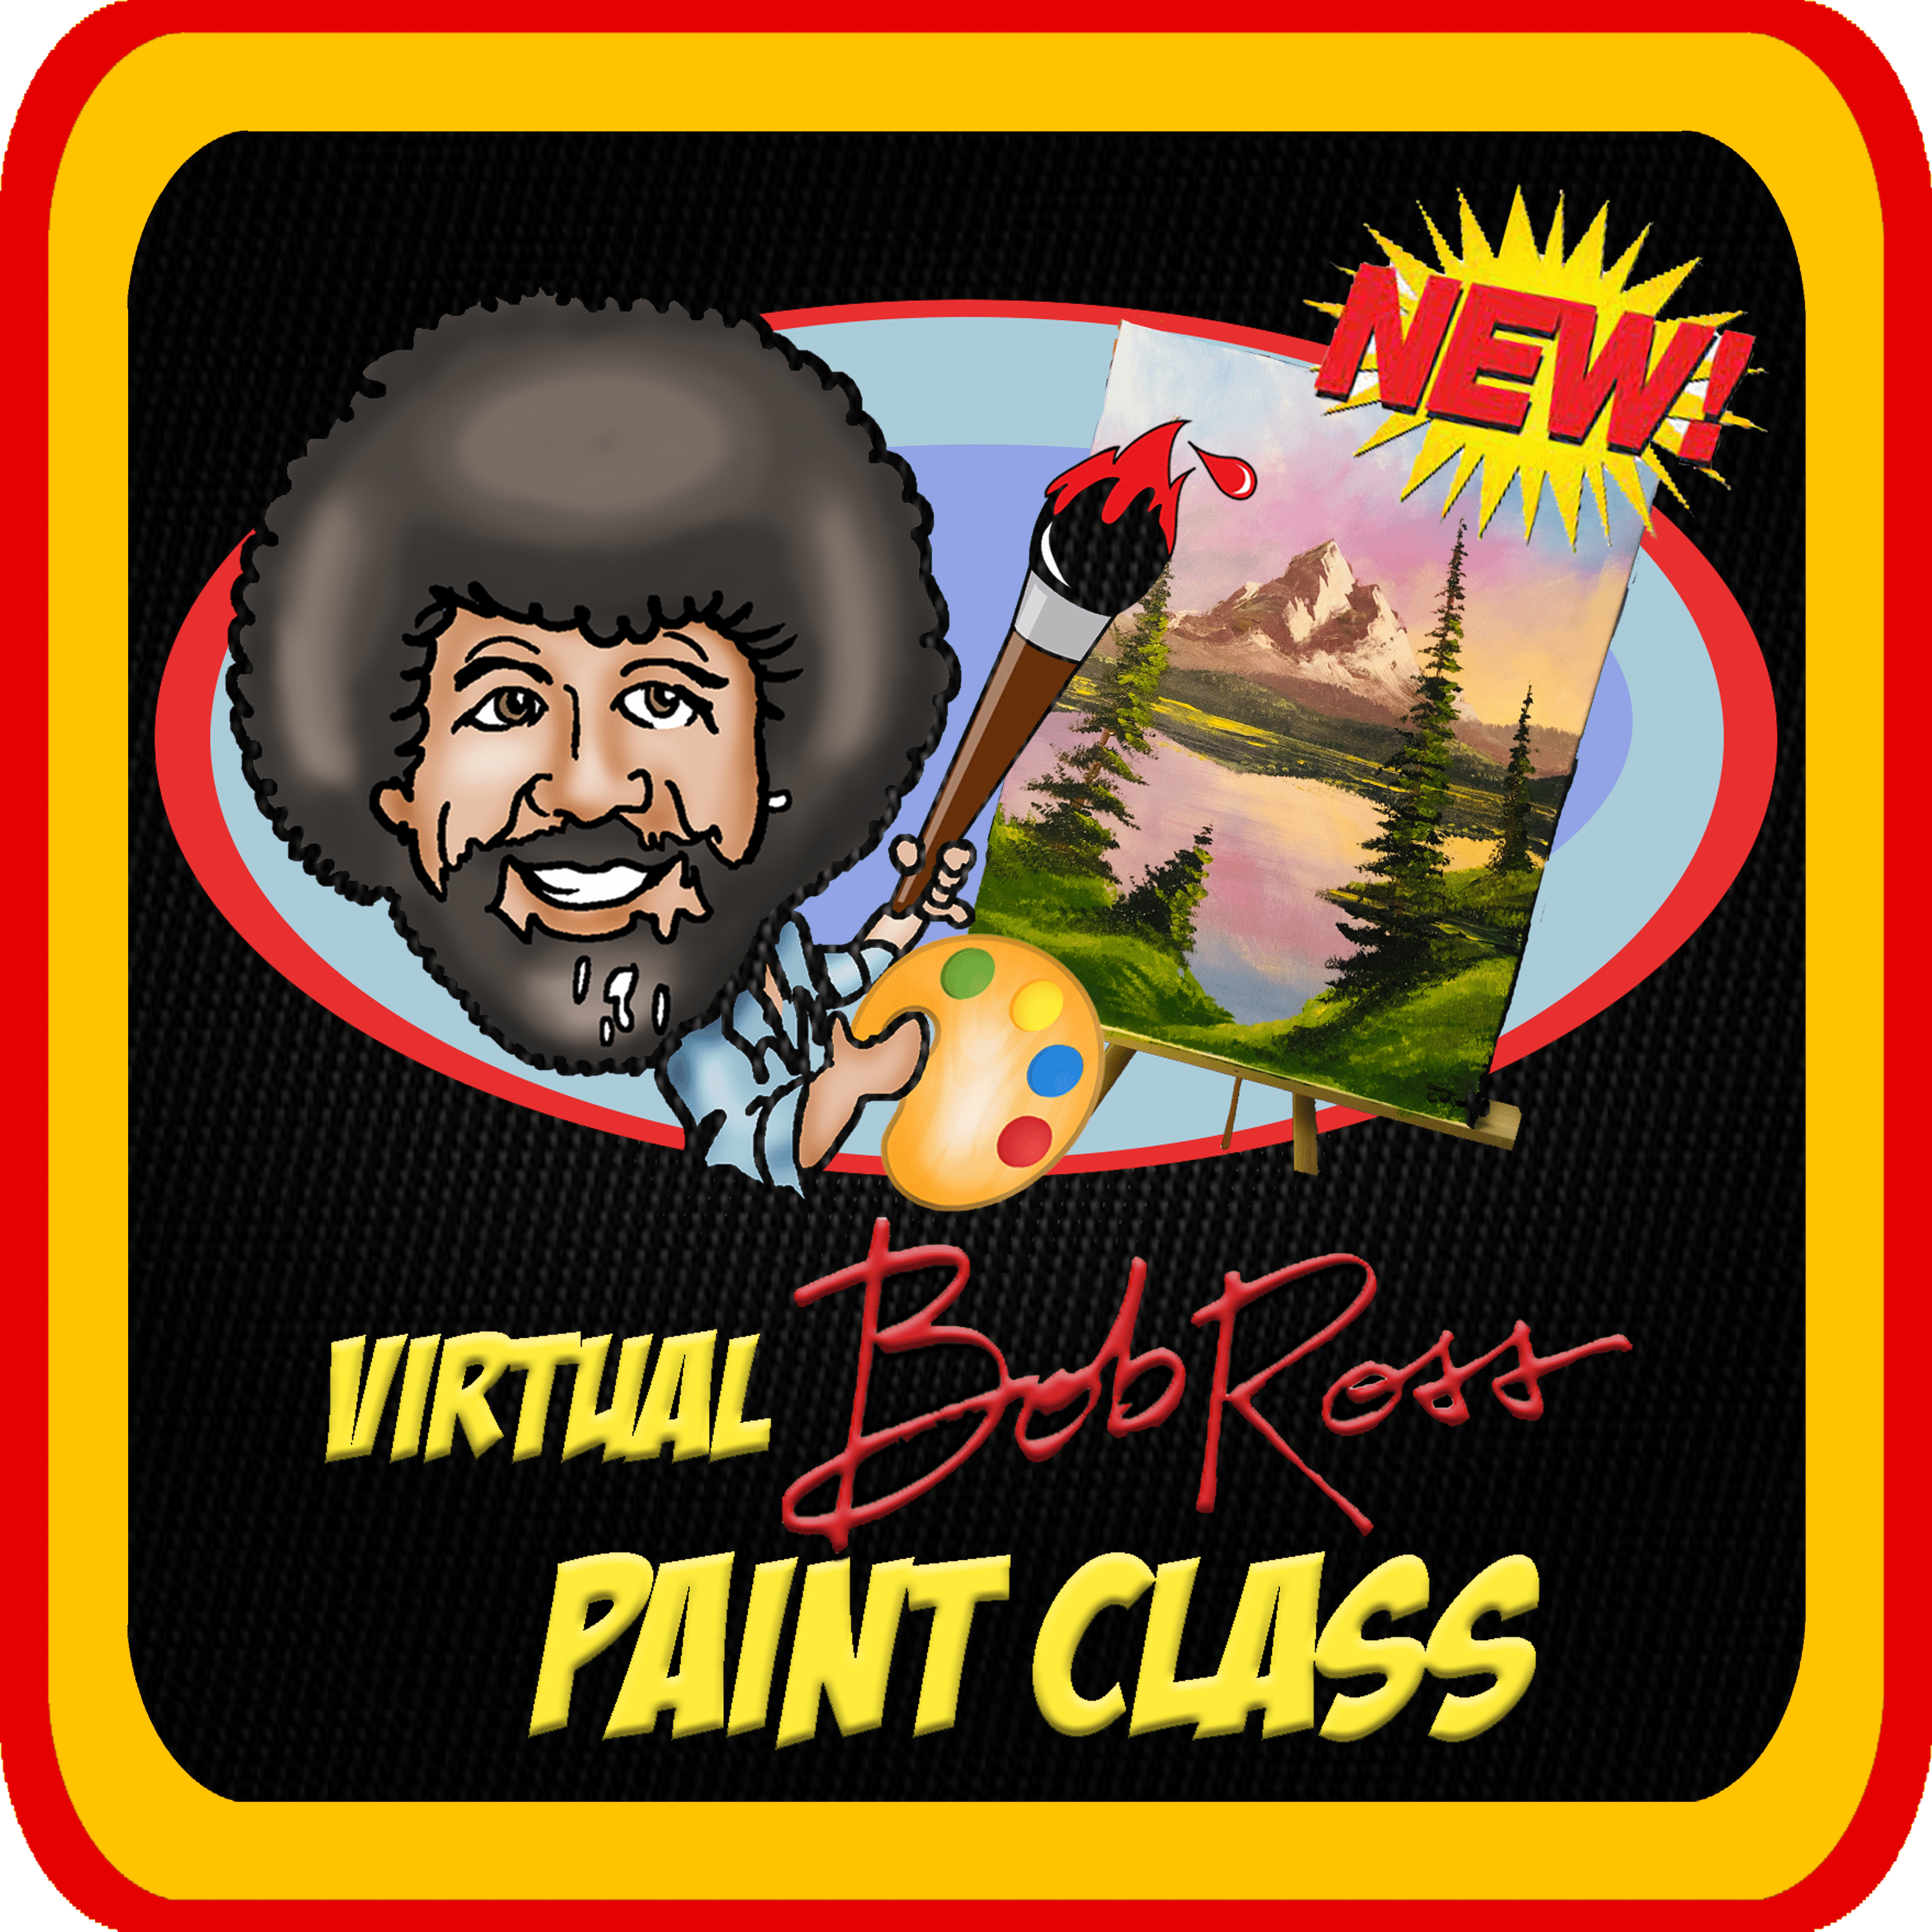 Virtual Bob Ross Paint Class, Zoom Paint Class, Virtual Paint Class, Virtual Team Building, Virtual Entertainment, Big Head Cartoon, Bob Ross, Virtual Party Ideas